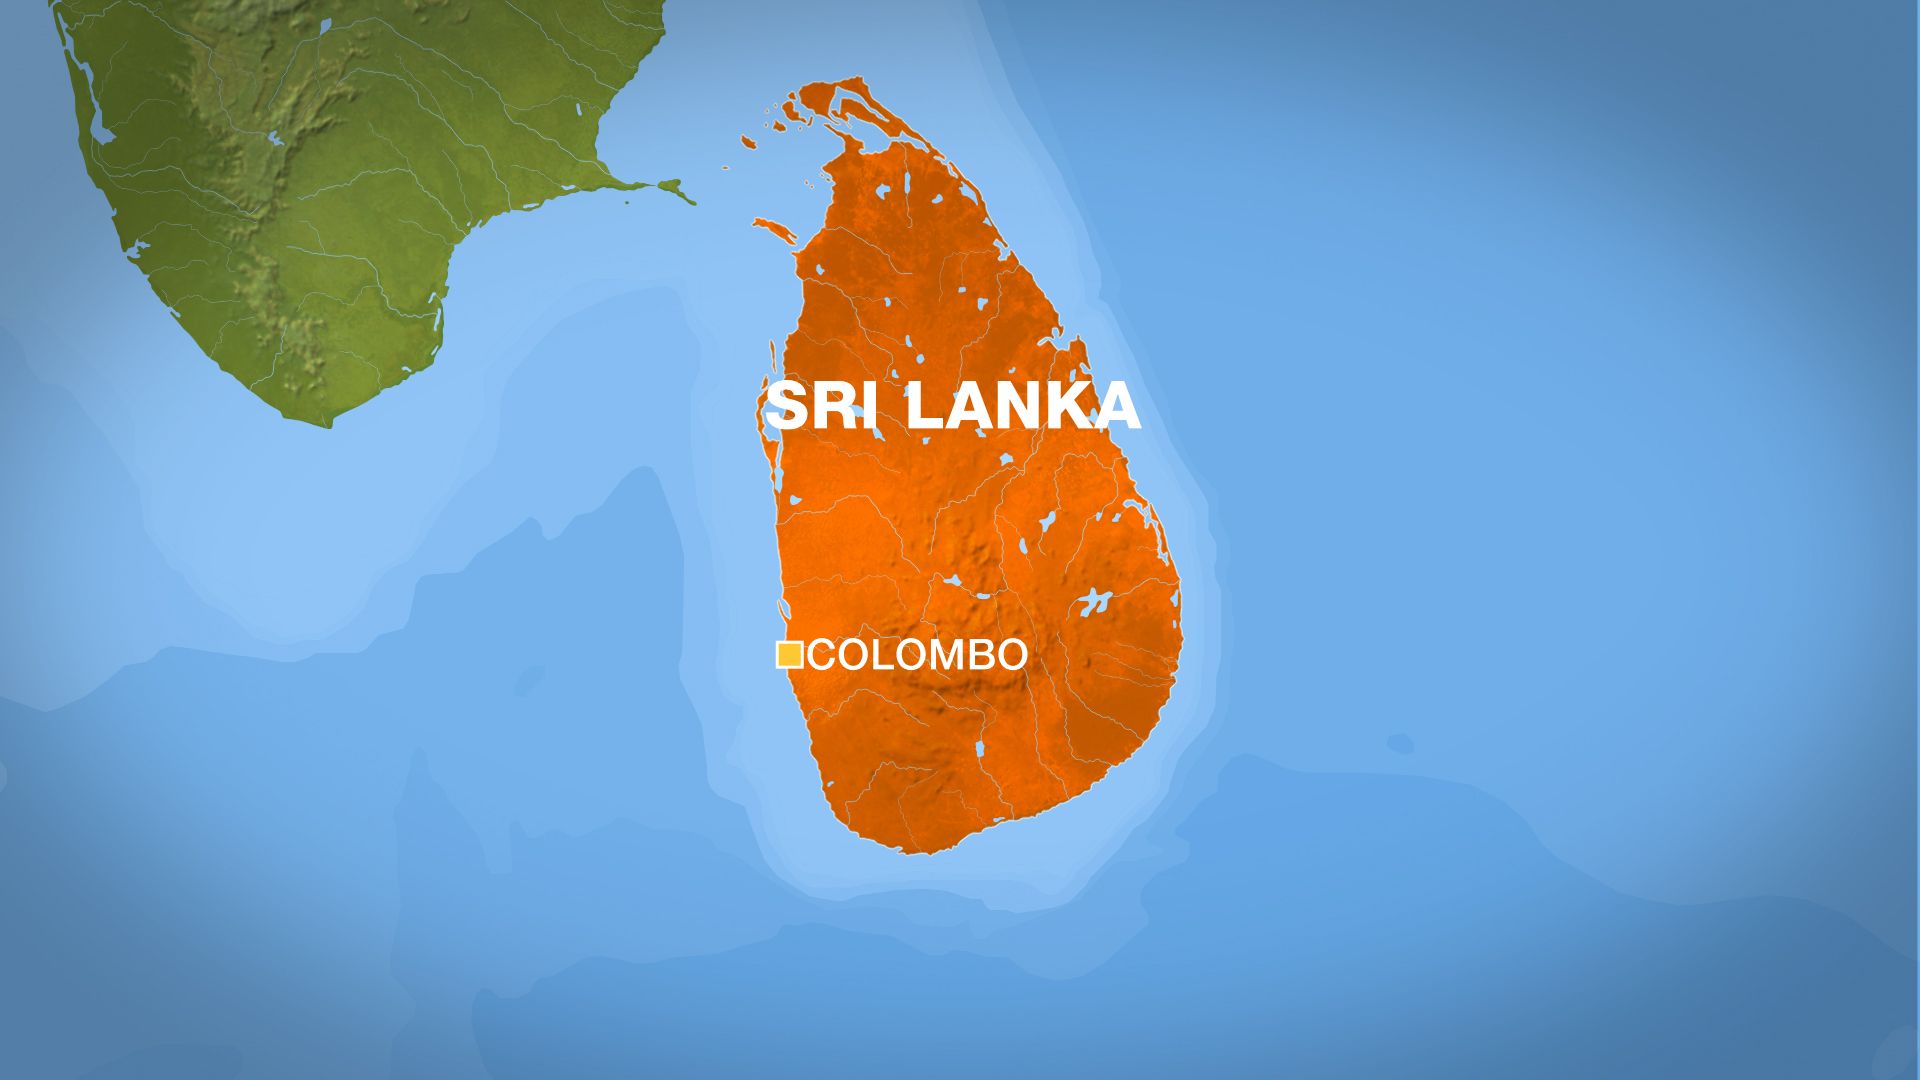 drugs-worth-$33m-seized-in-sri-lanka’s-biggest-ever-bust